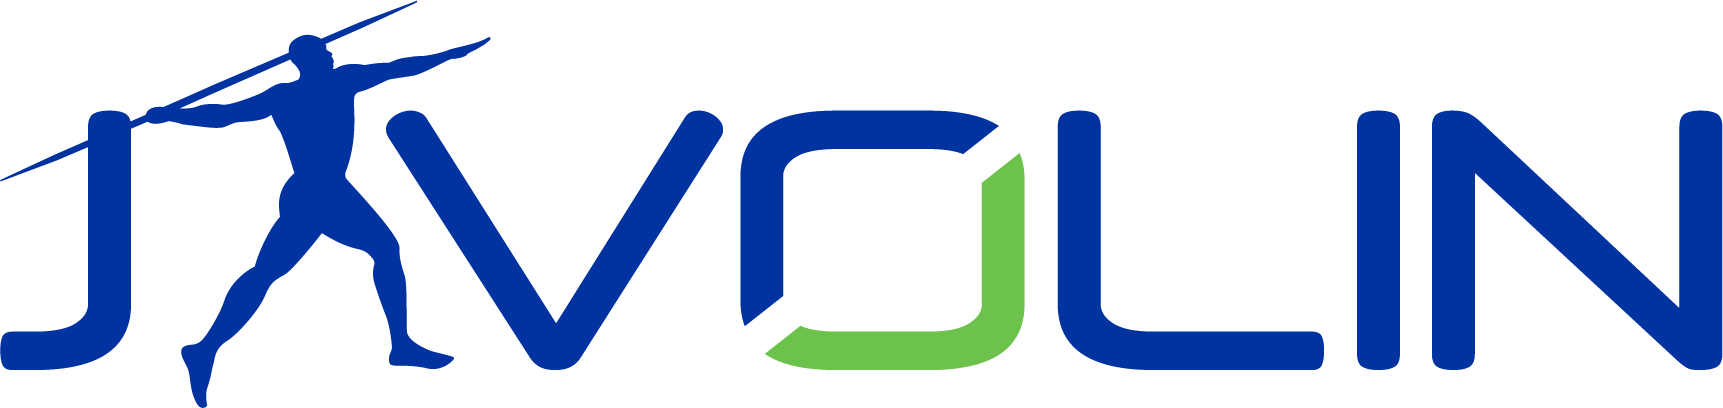 Javolin Logo